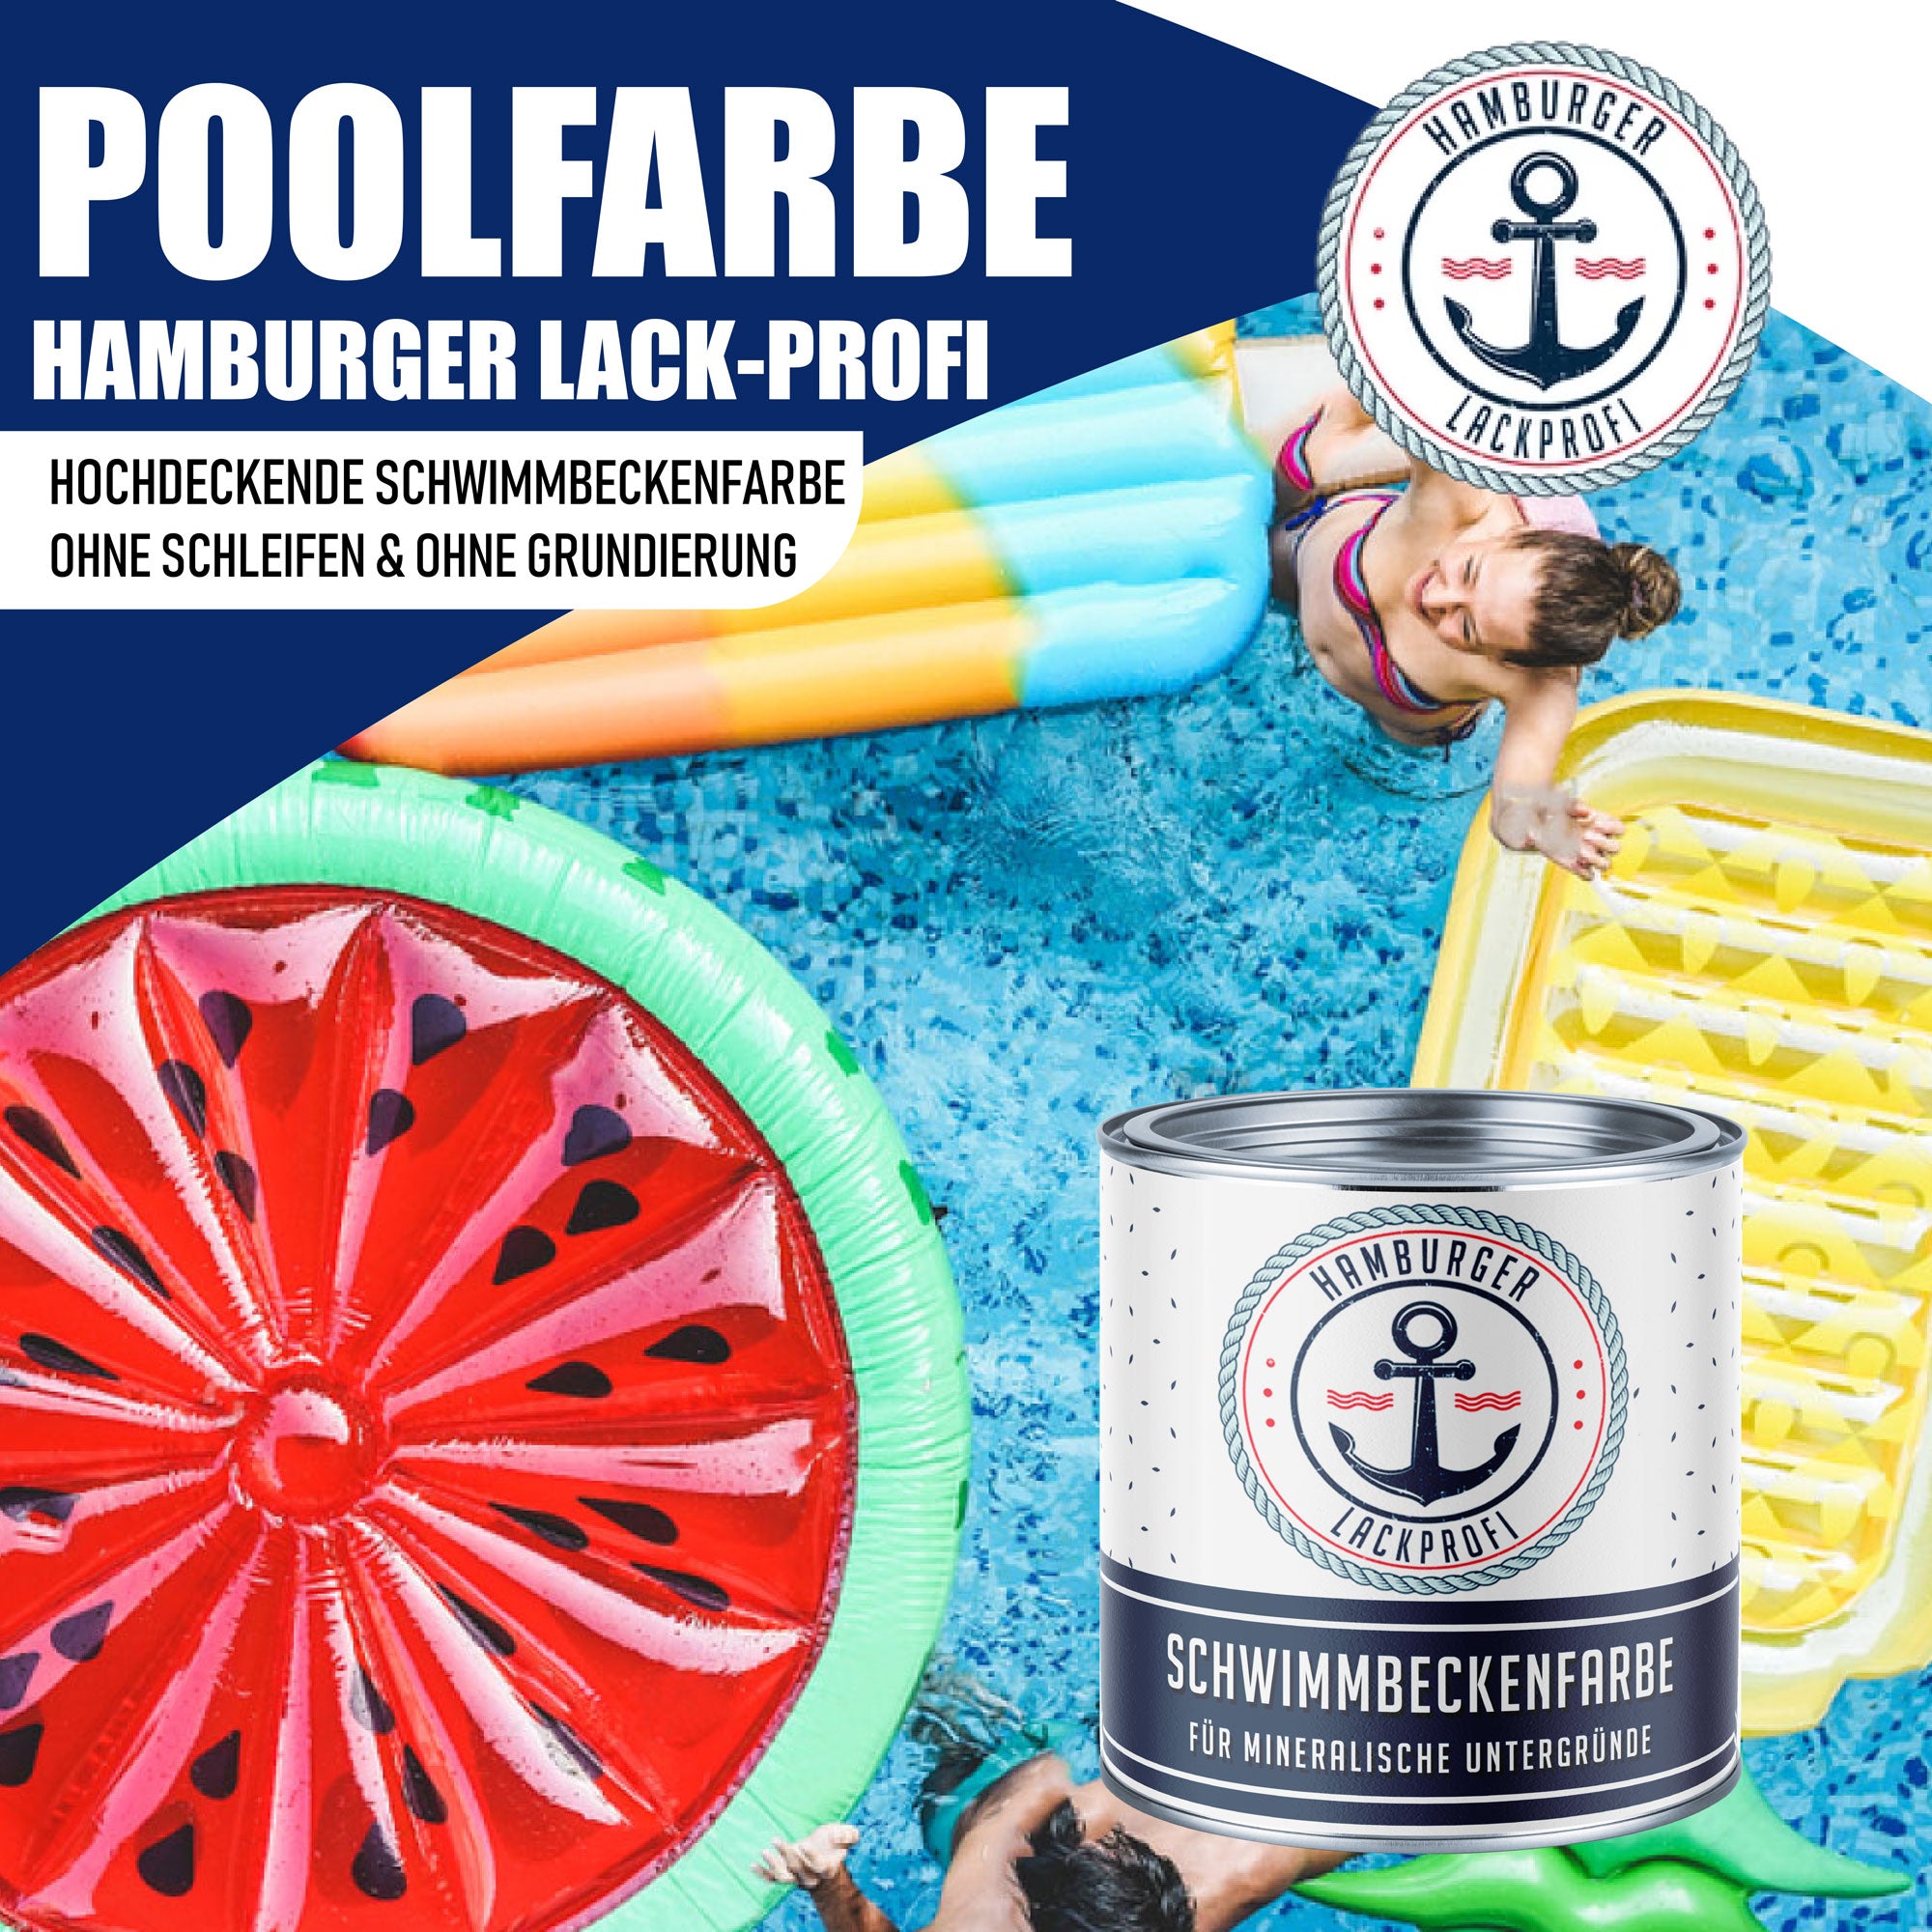 Hamburger Lack-Profi Schwimmbeckenfarbe Altrose RAL 3014 - hochdeckende Poolfarbe